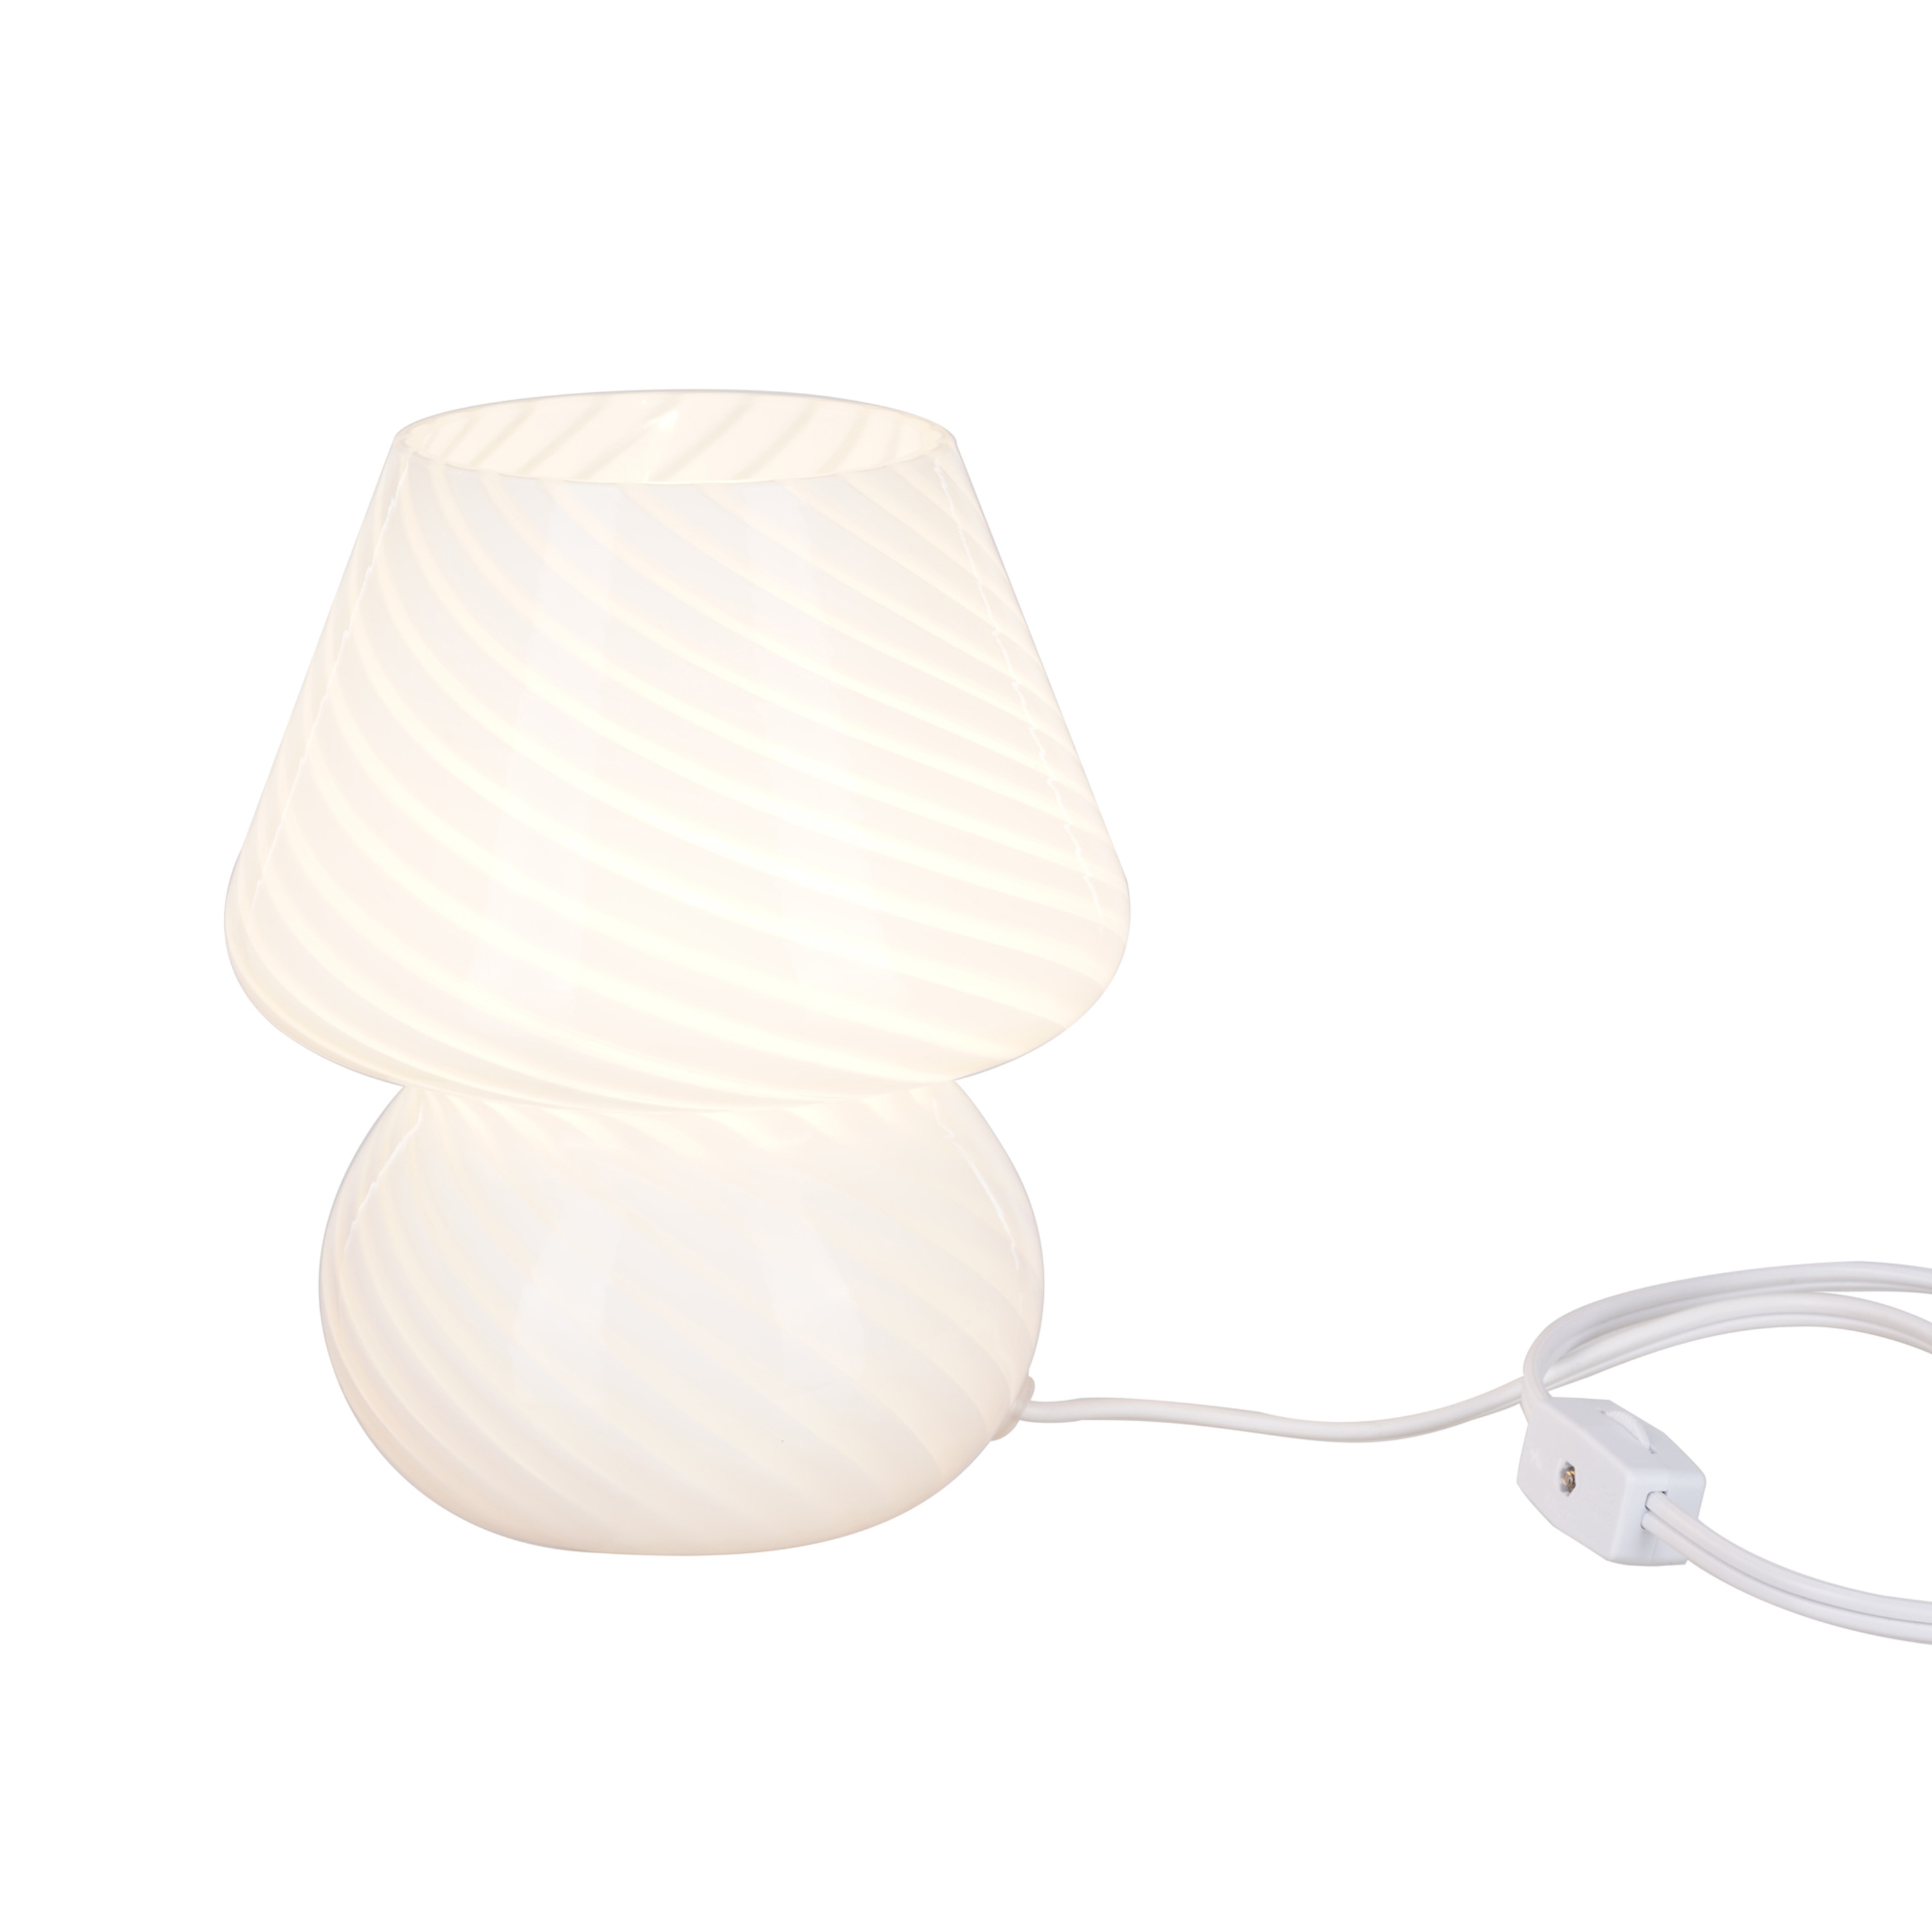 8" Glass Mushroom Lamp, White Stripe, Glossy Finish - image 9 of 12